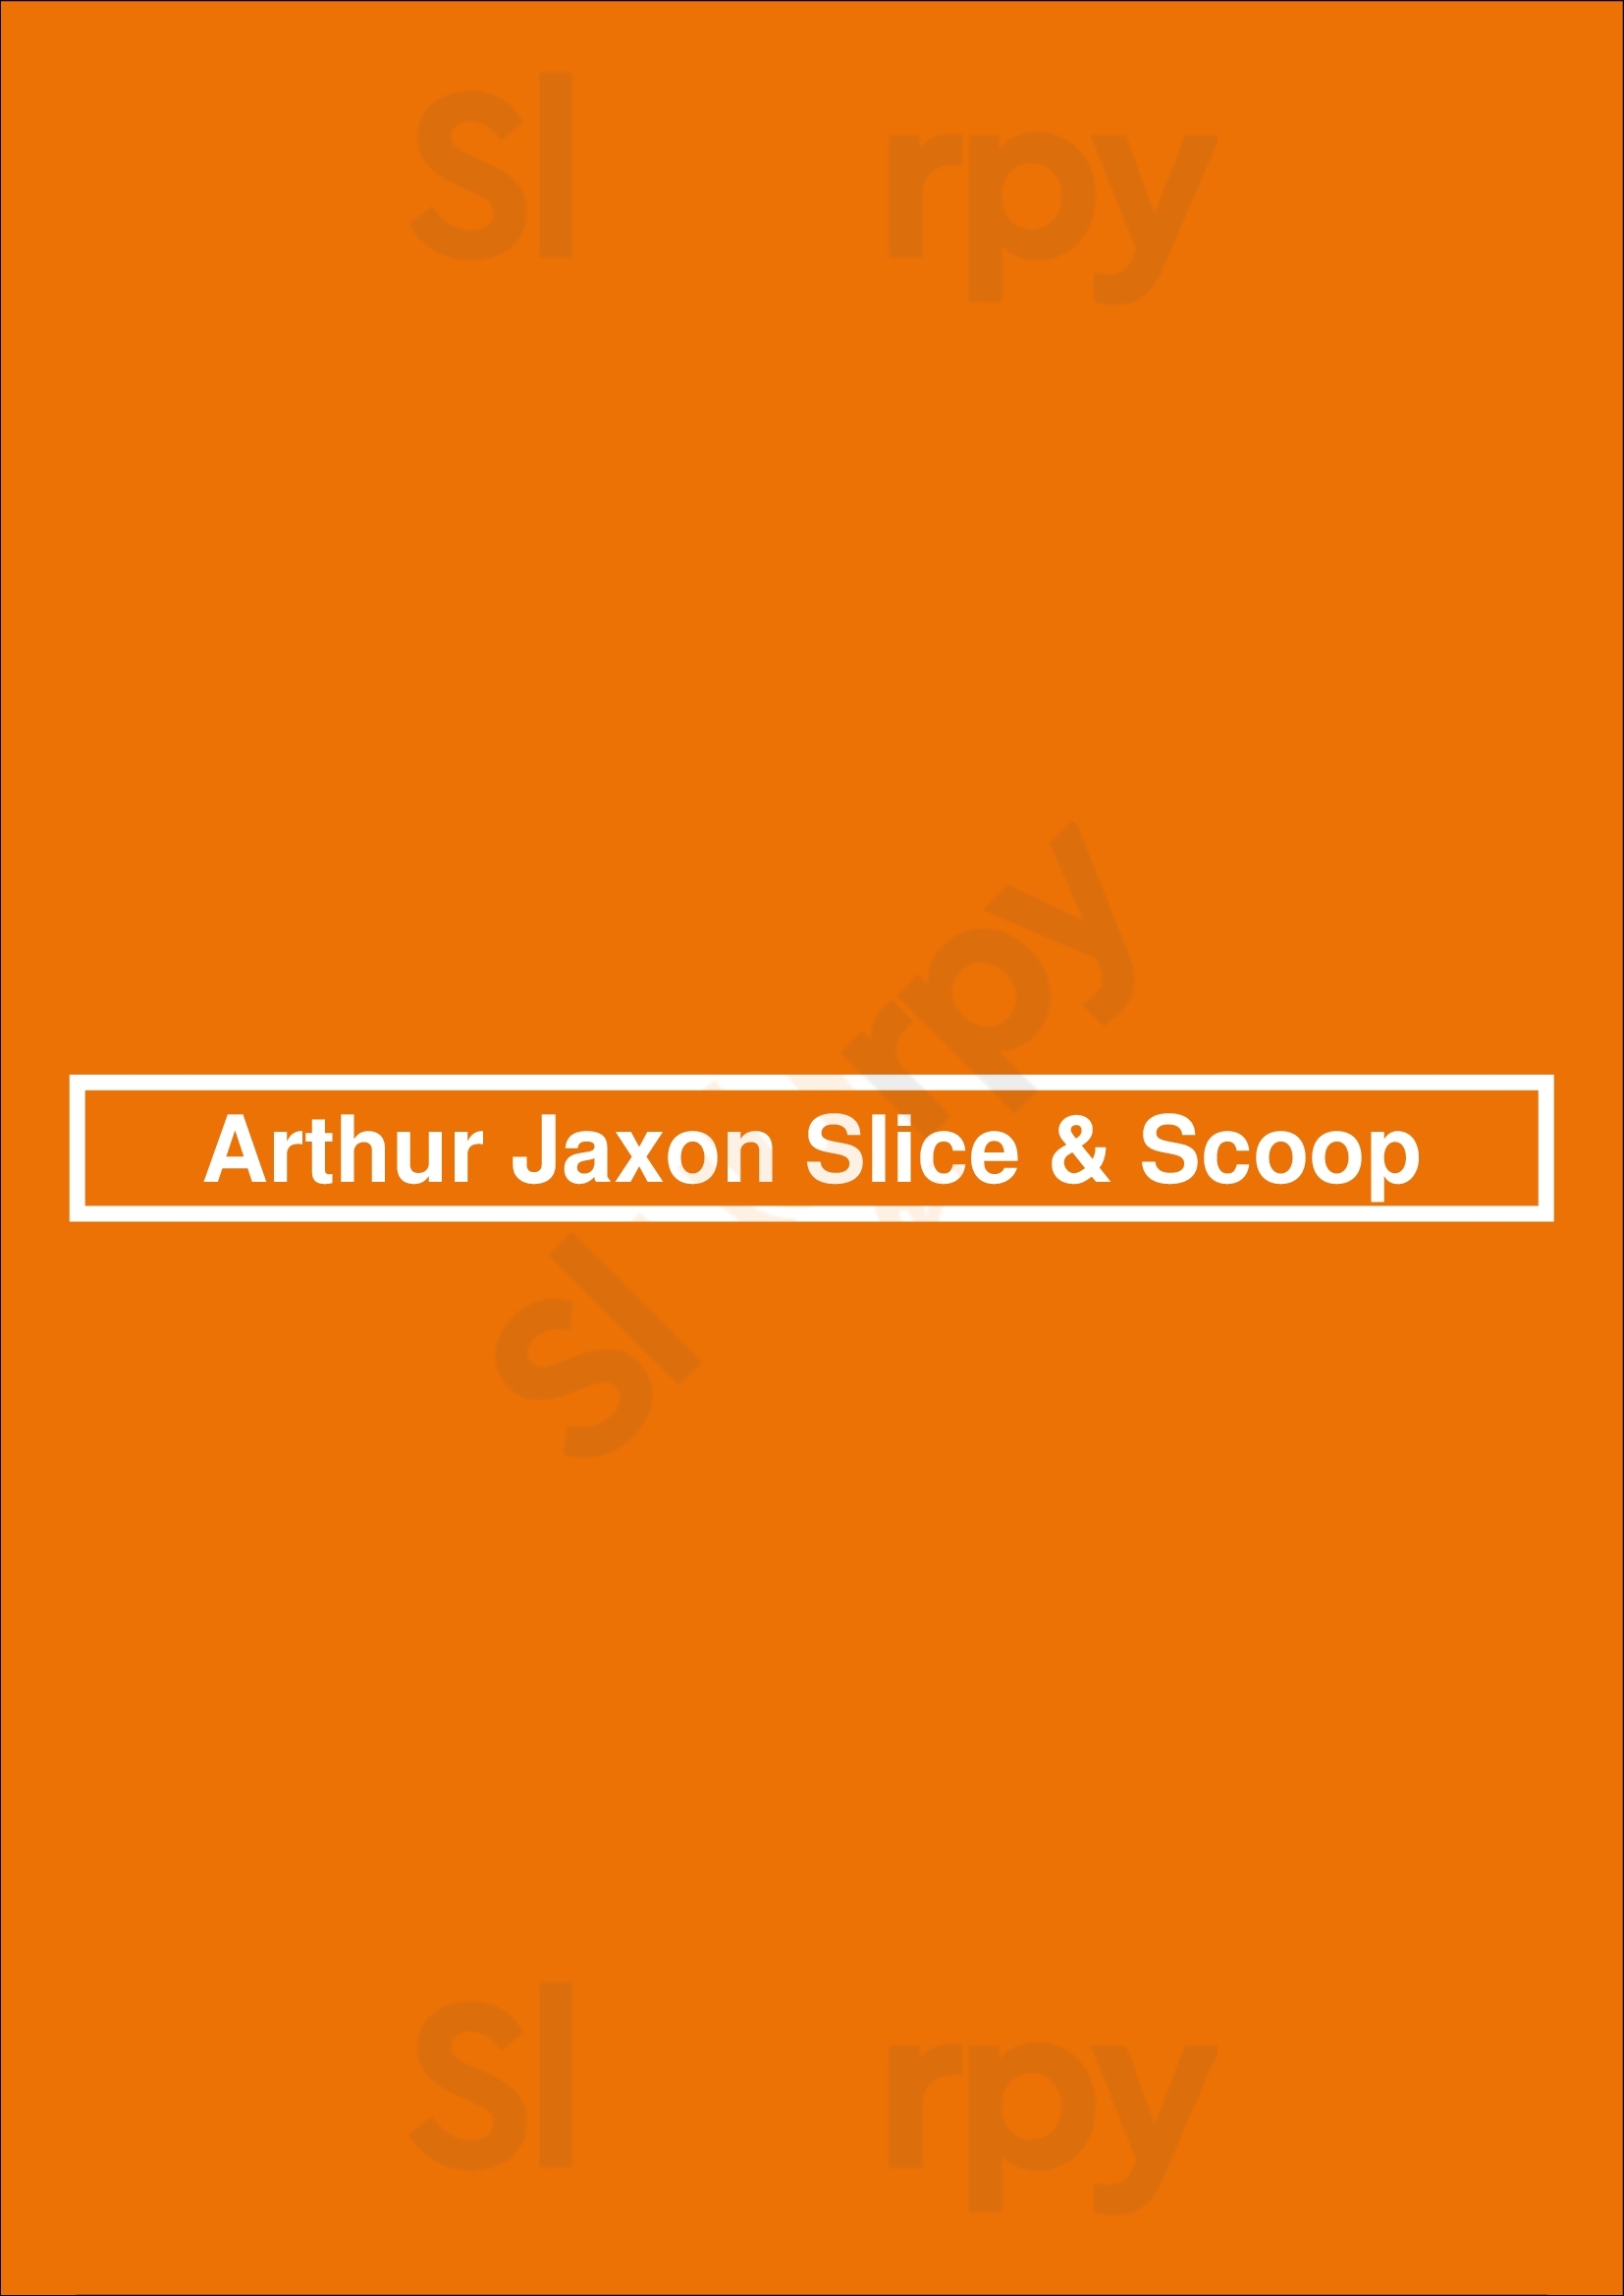 Arthur Jaxon Slice & Scoop Rochester Menu - 1